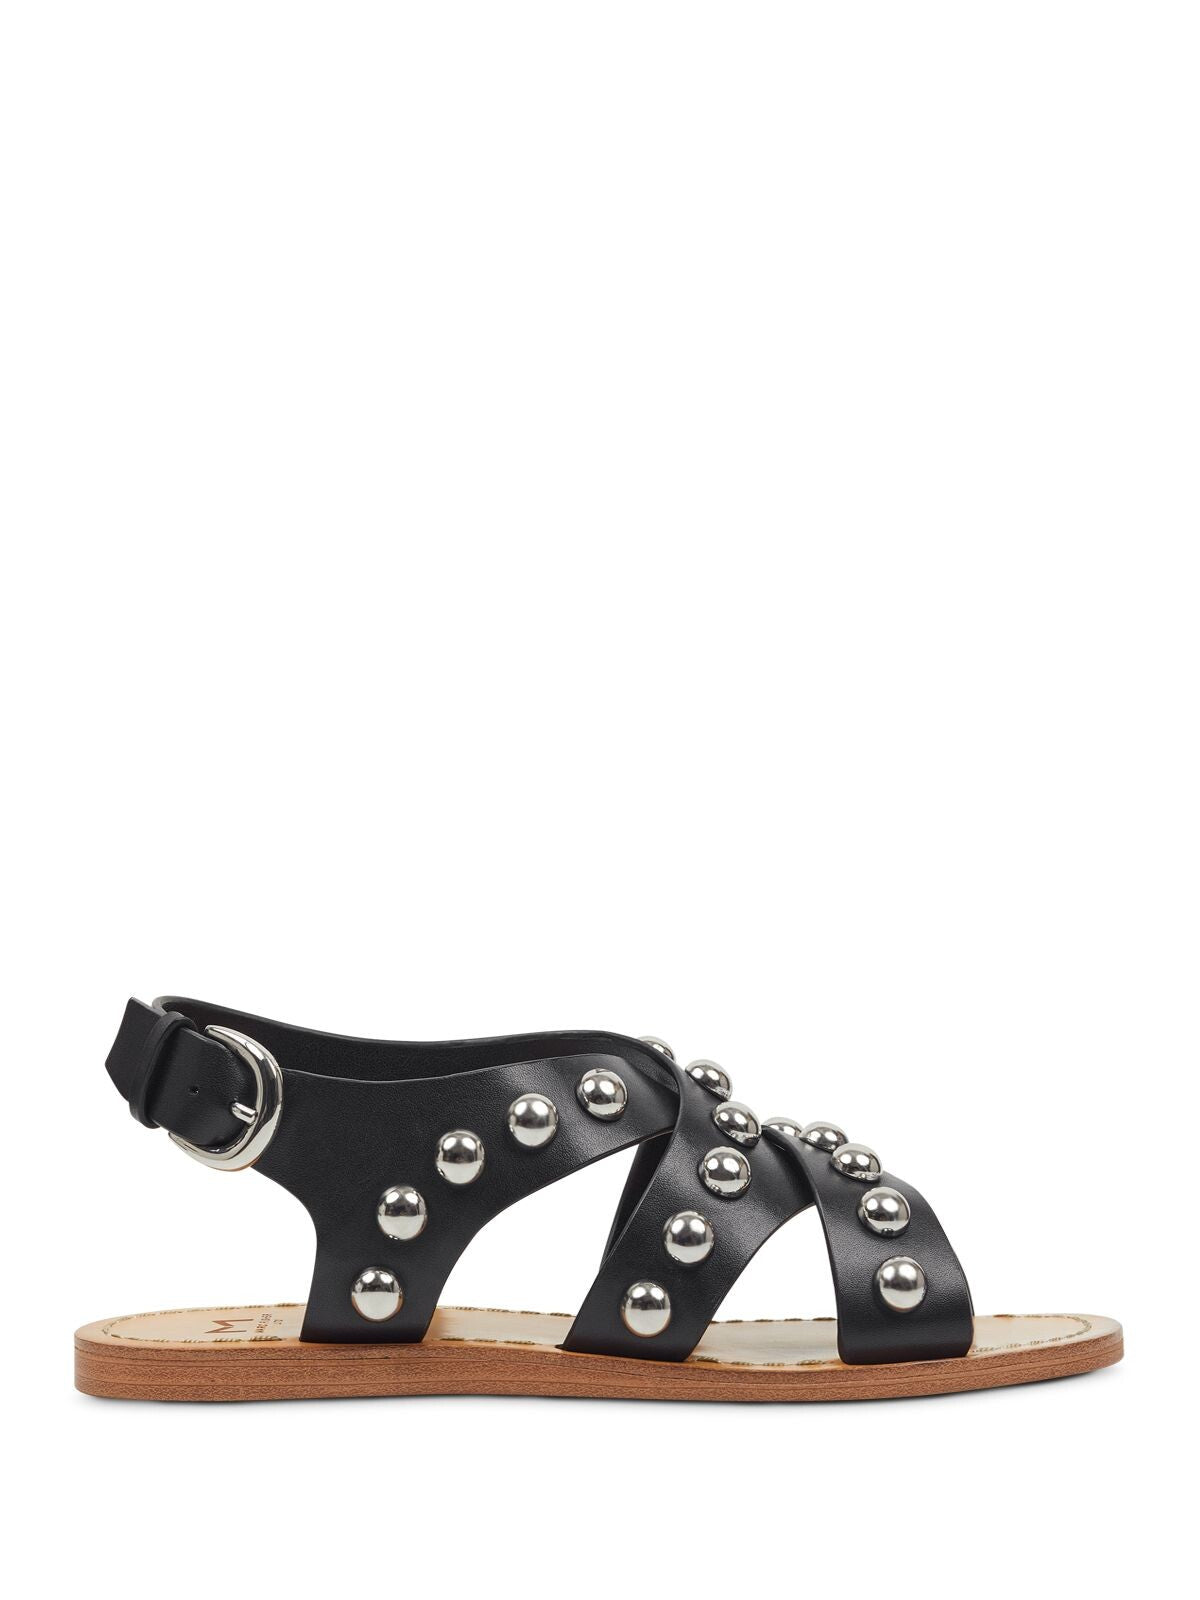 MARC FISHER Womens Black Studded Adjustable Strap Prancer Round Toe Buckle Leather Gladiator Sandals Shoes 6 M